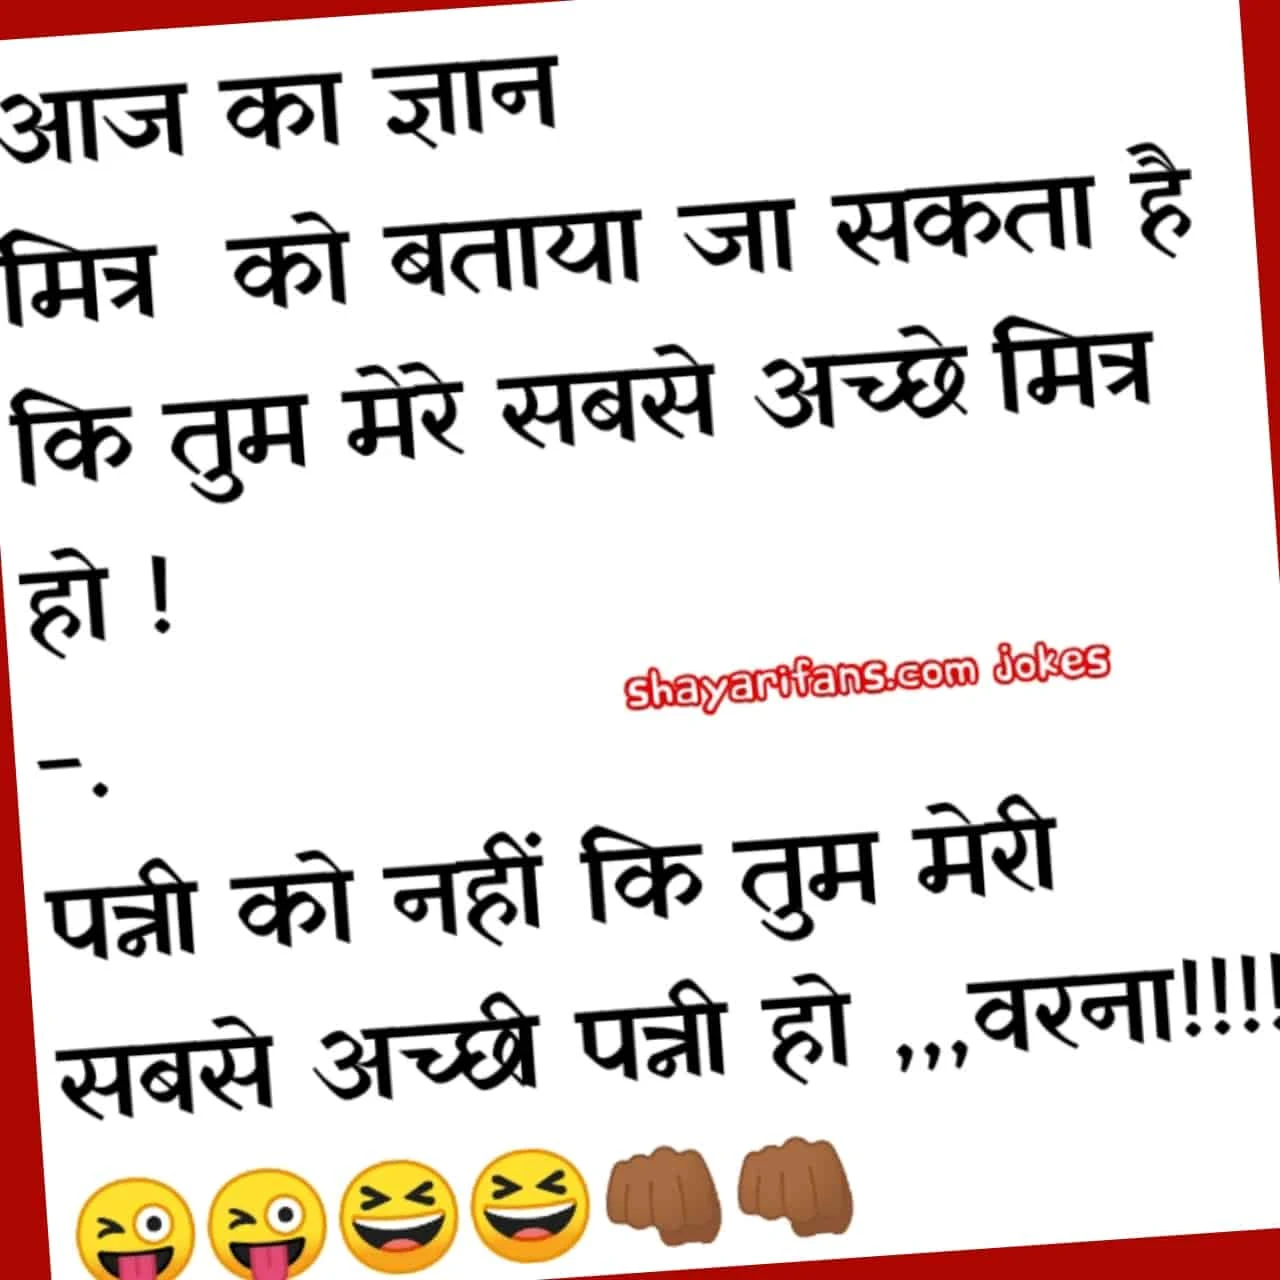 Jokes in hindi for whatsapp